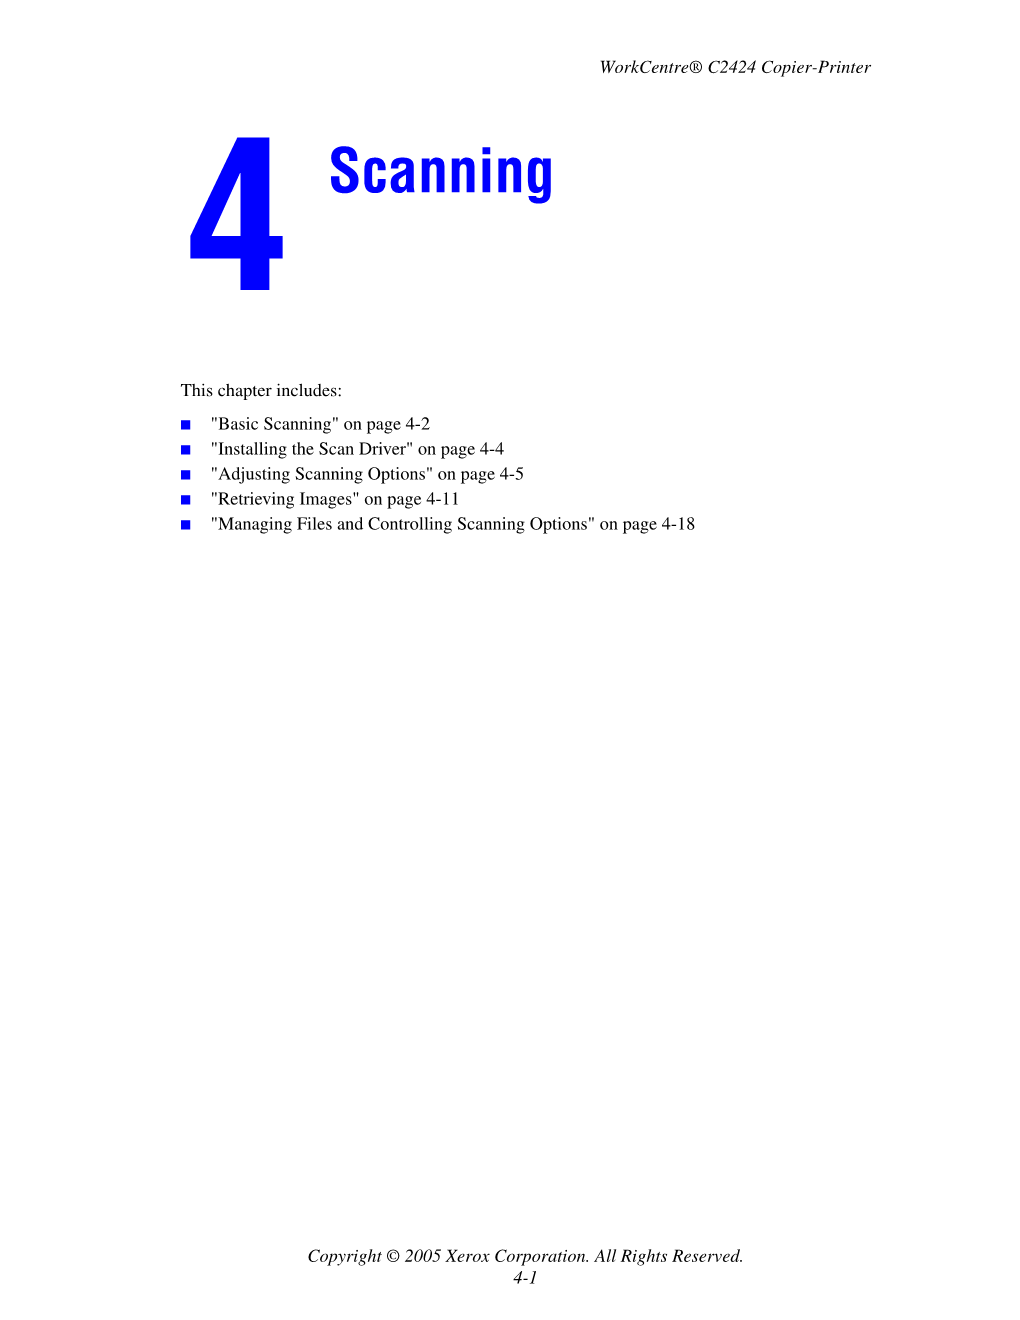 Xerox Workcentre C2424 Copier-Printer User Guide: Scanning